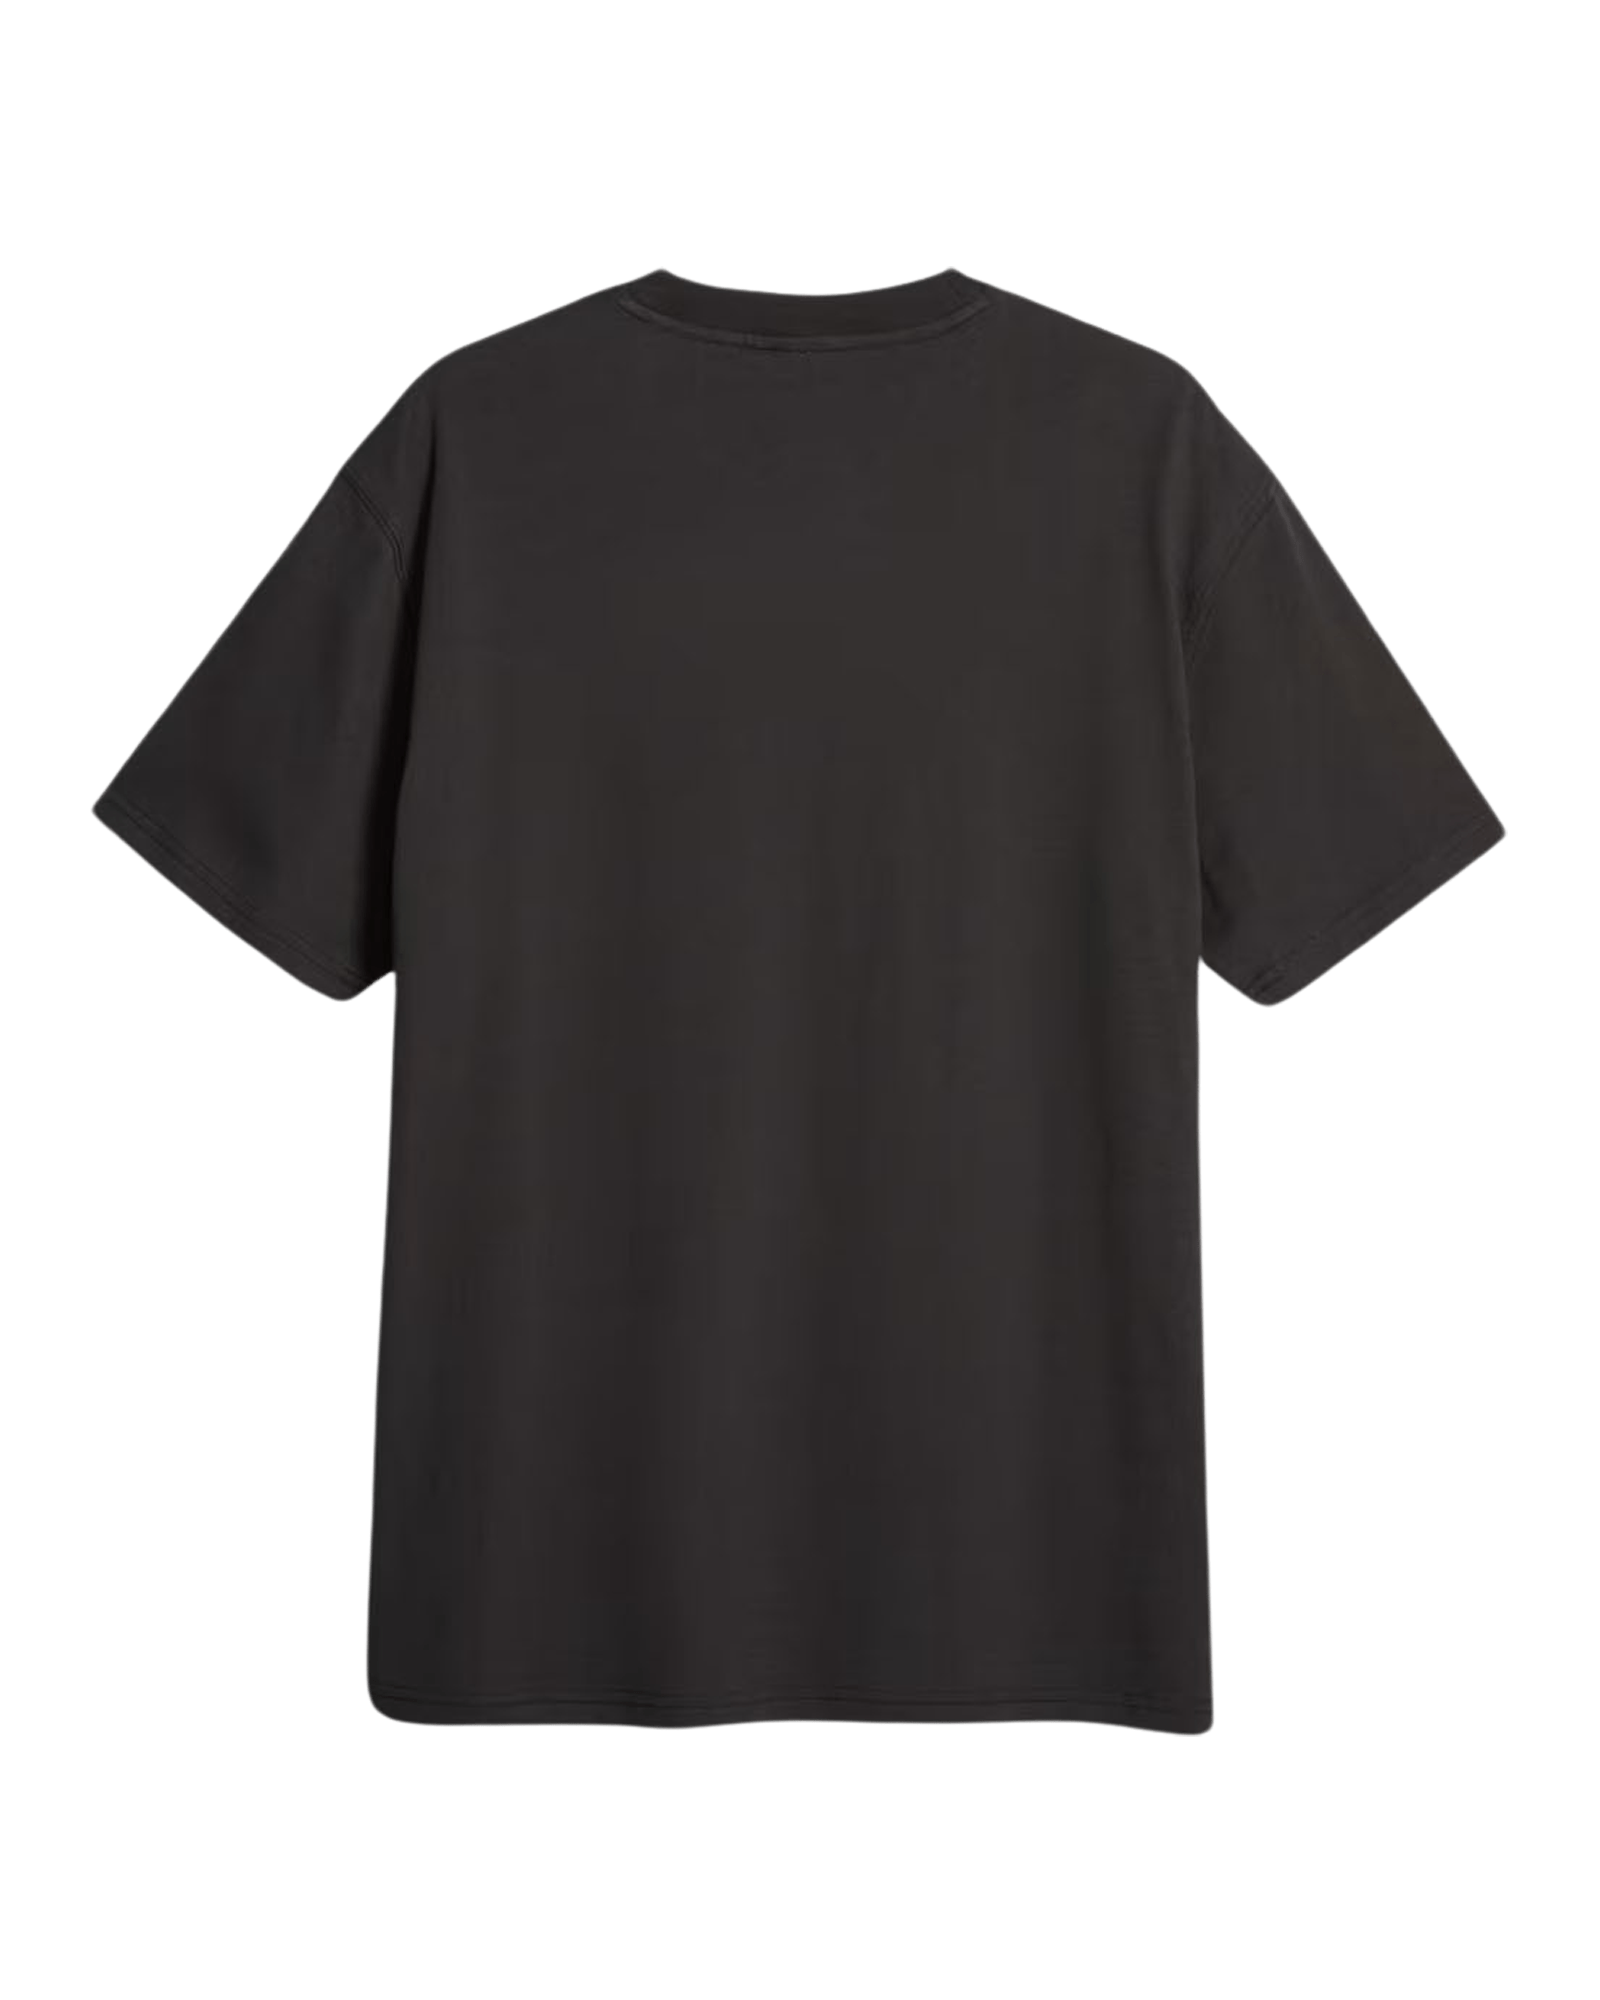 Typo Tee x Pleasures $54 Puma Tops T-Shirts Black